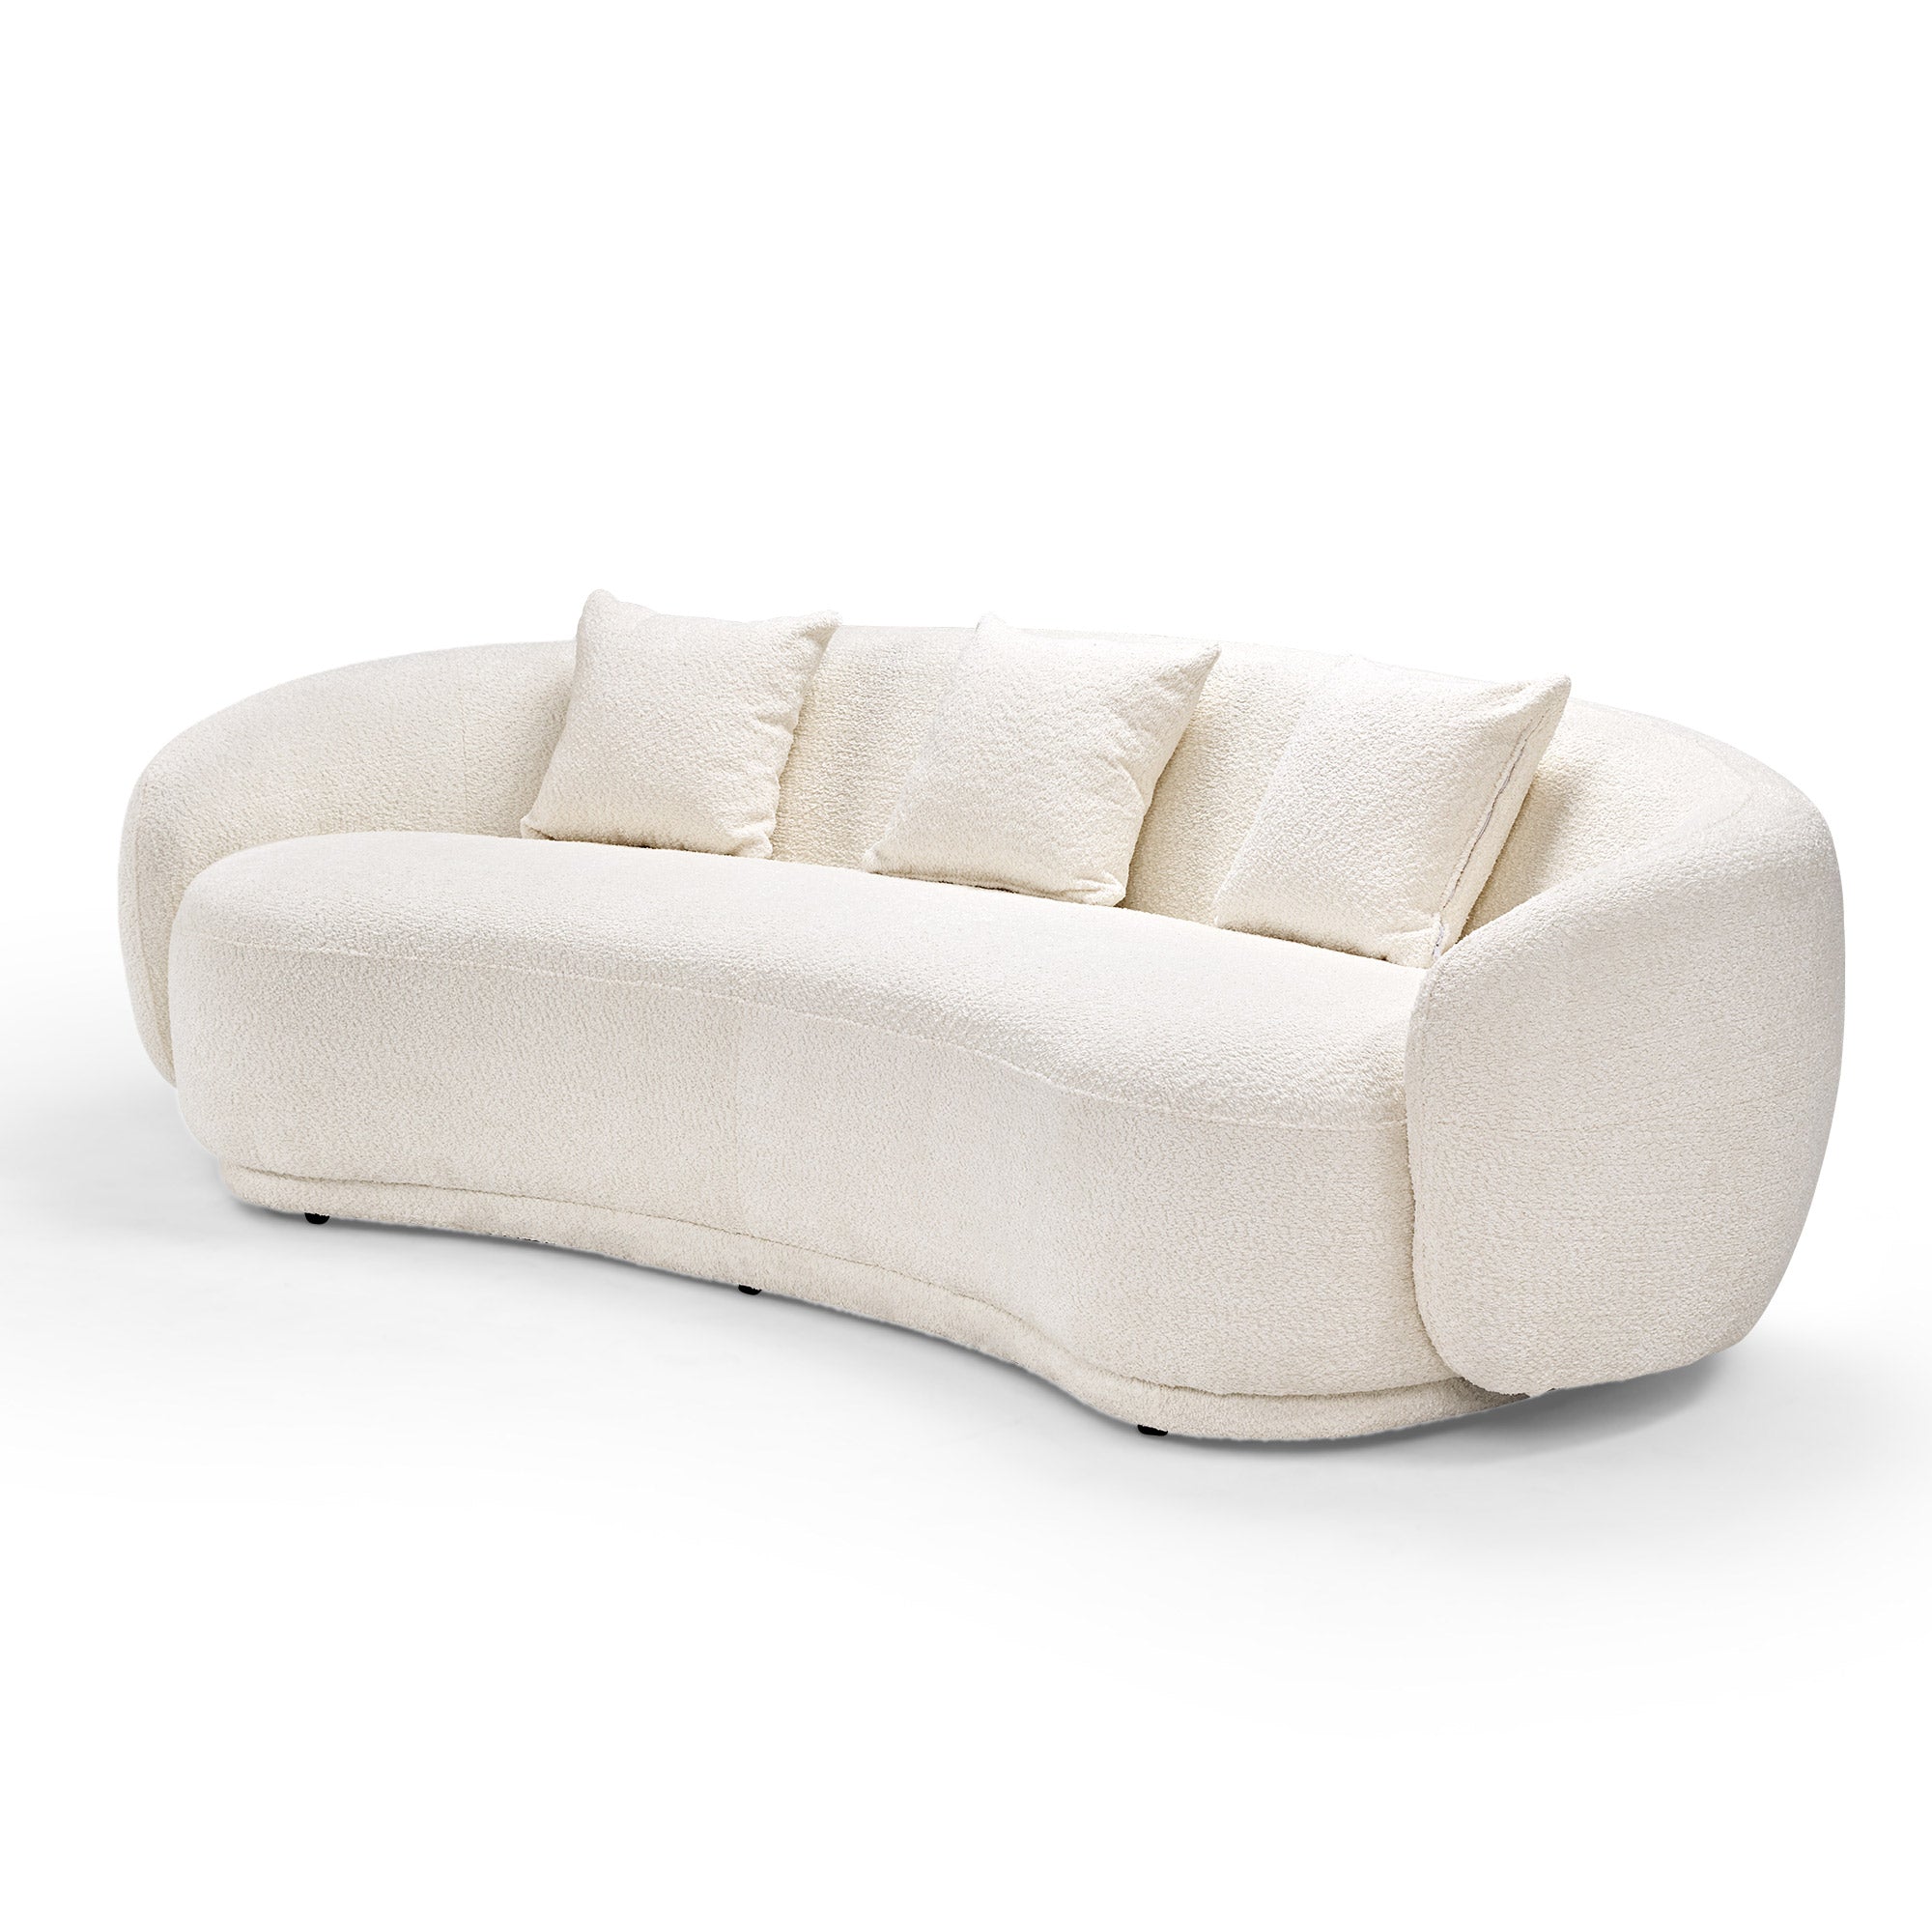 Sf02 White Modern Cashew Shaped Sectional Sofa Set With Sherpa Fabric